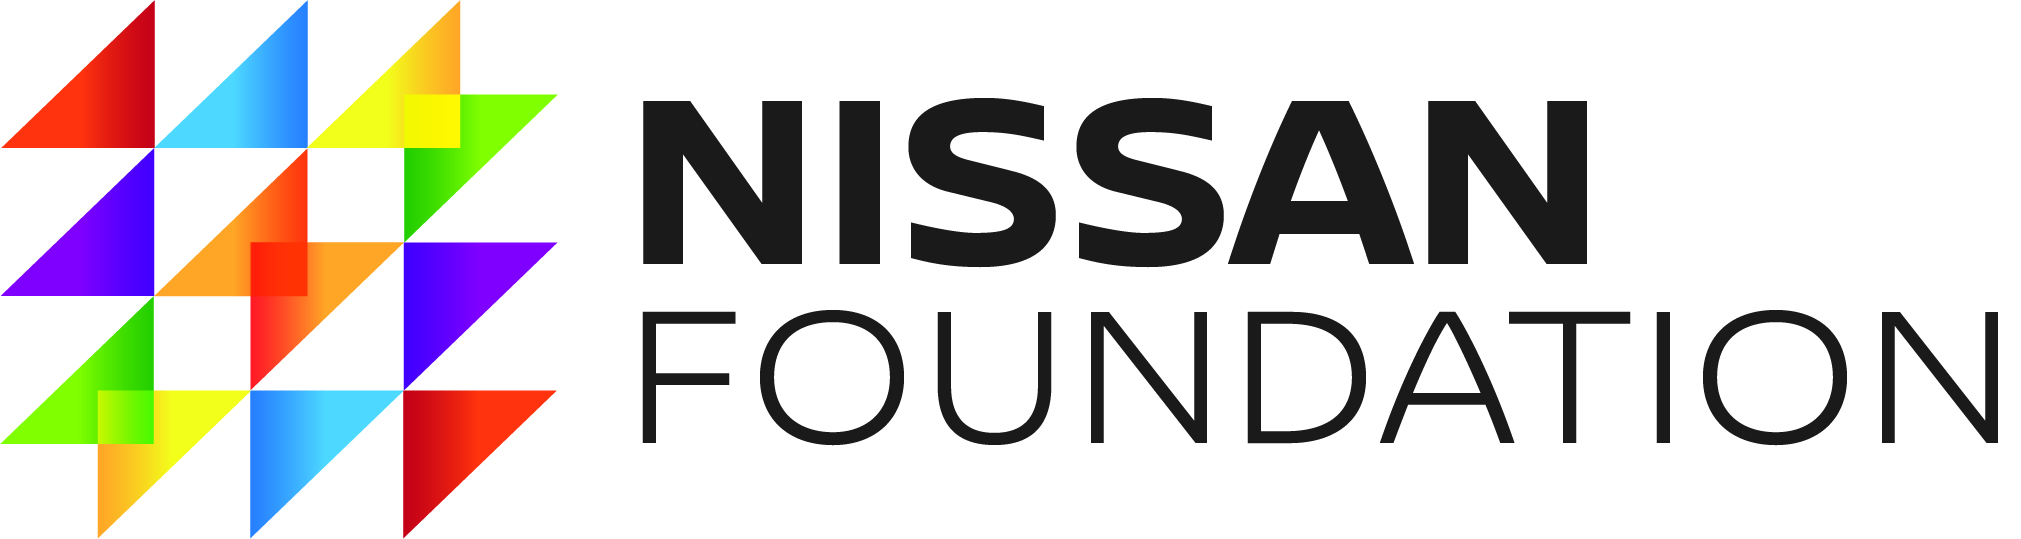 Nissan-Foundation-logo